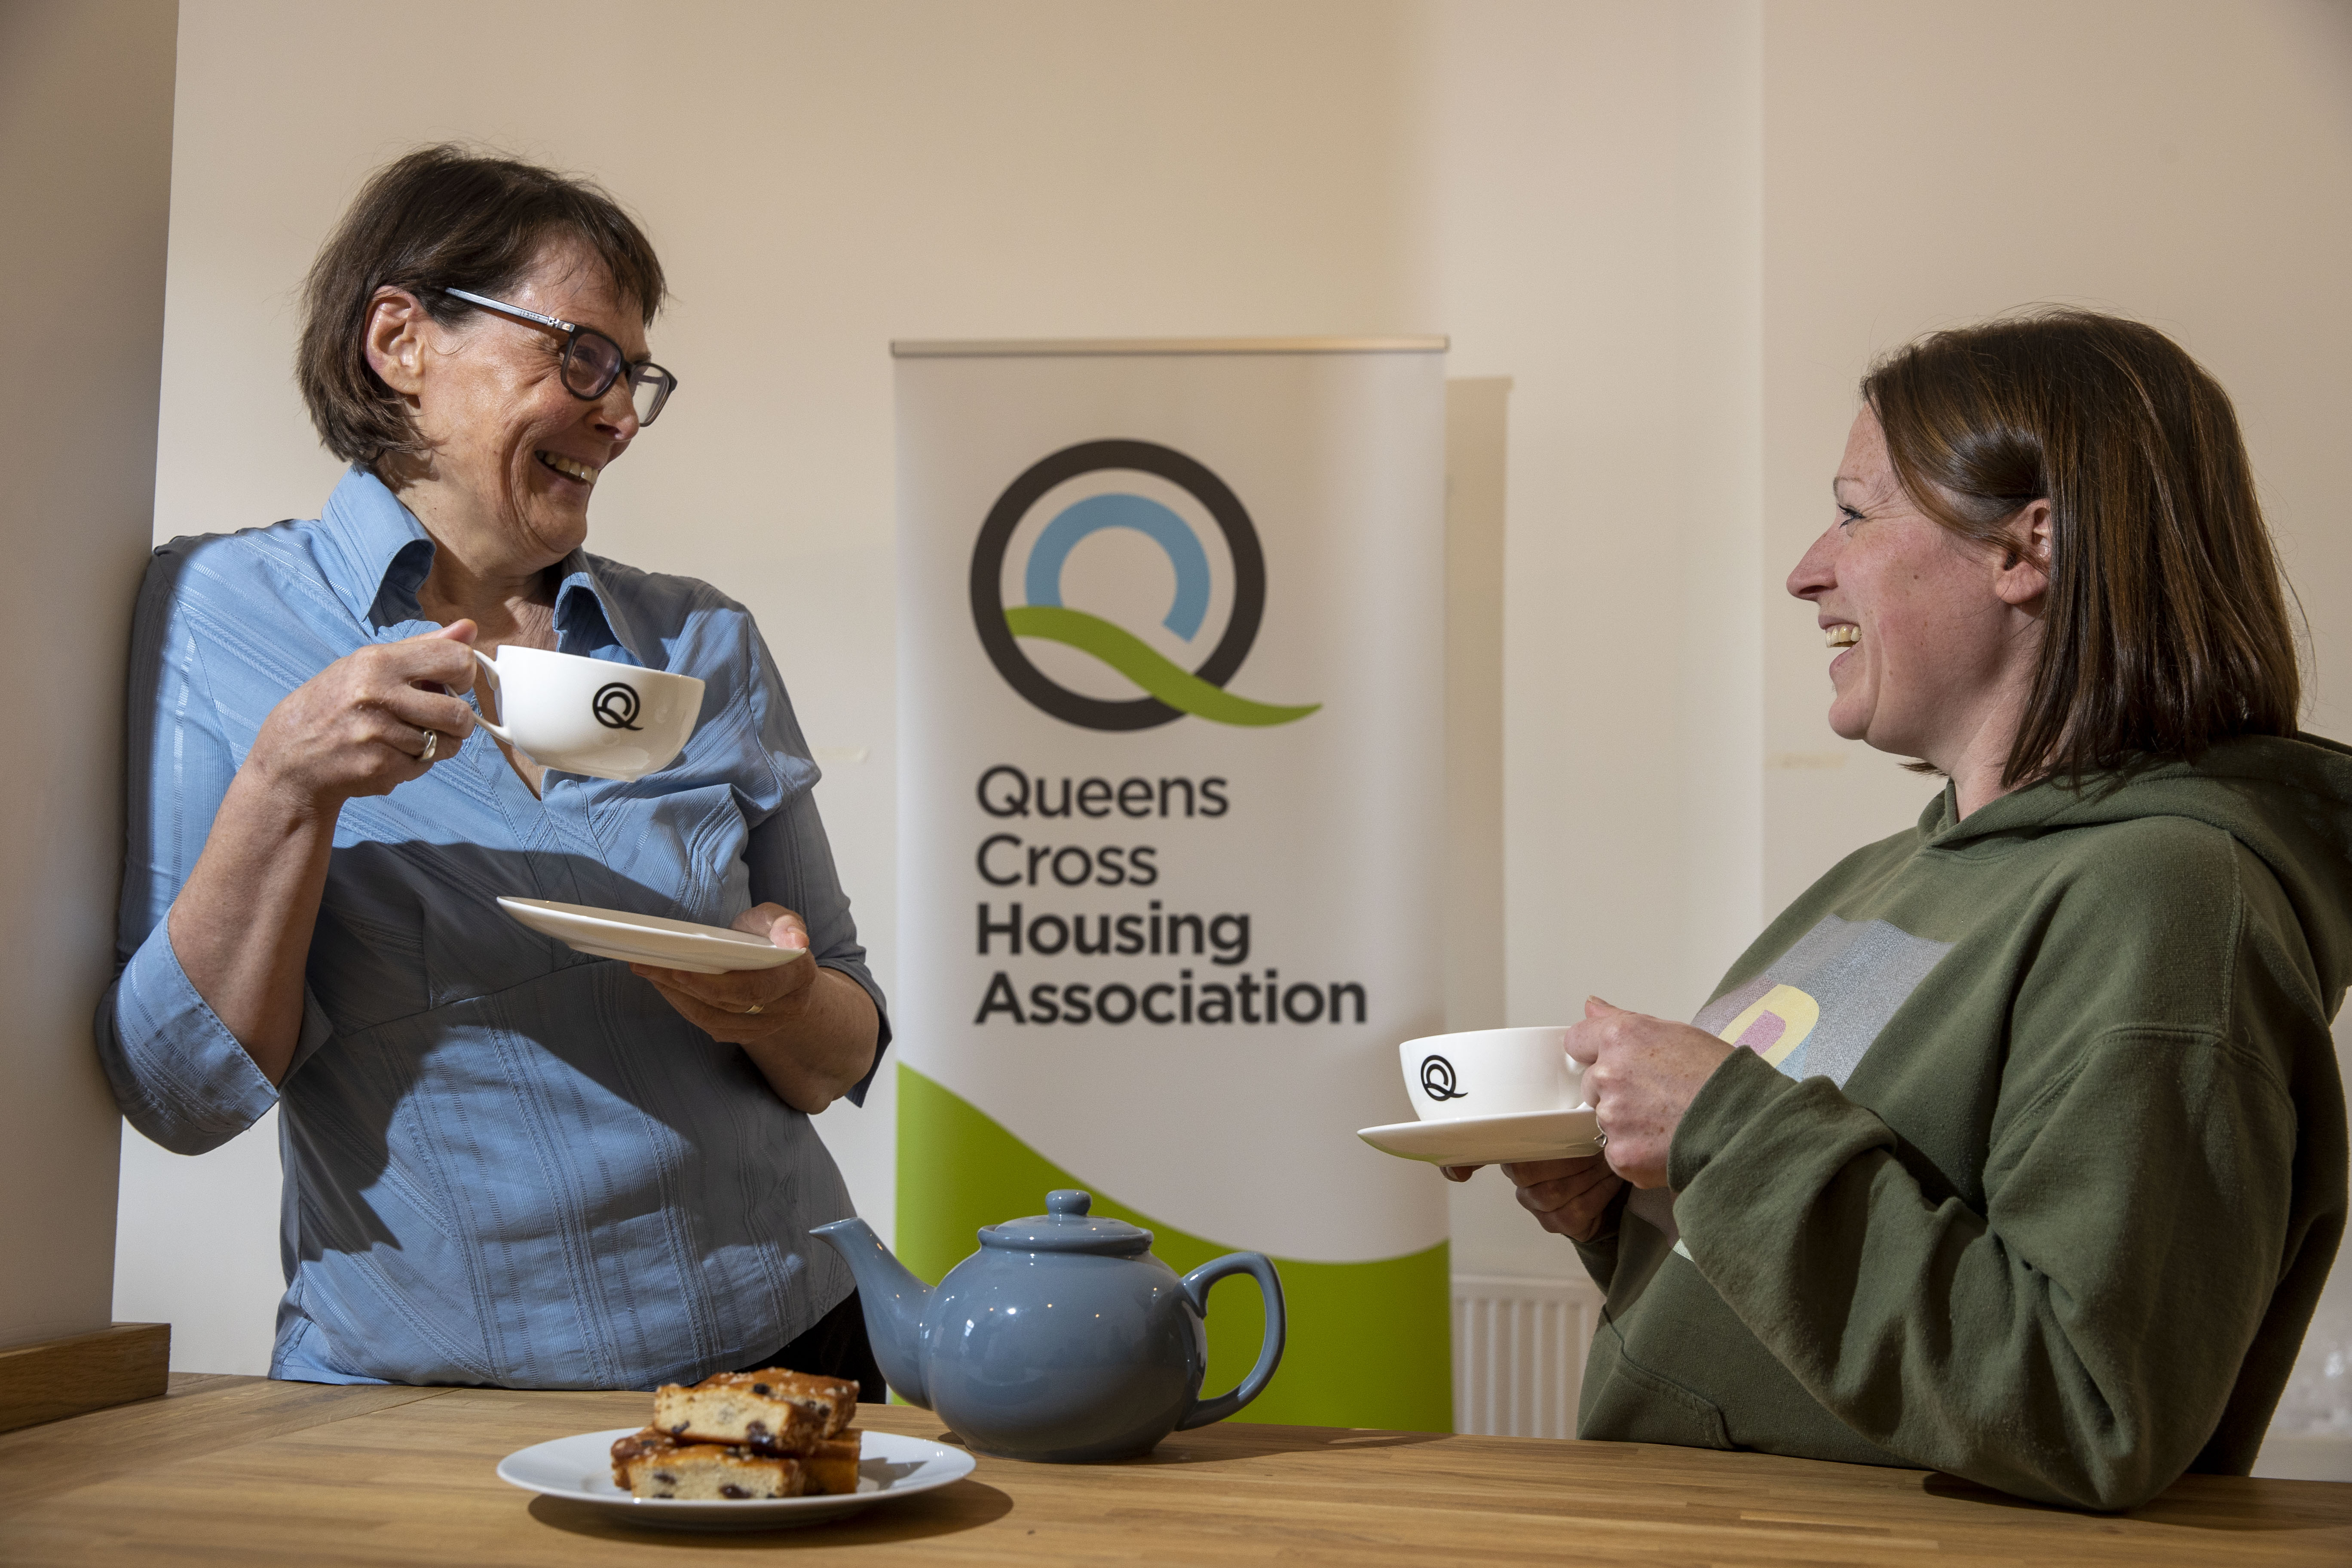 New community café for Queens Cross Housing Association